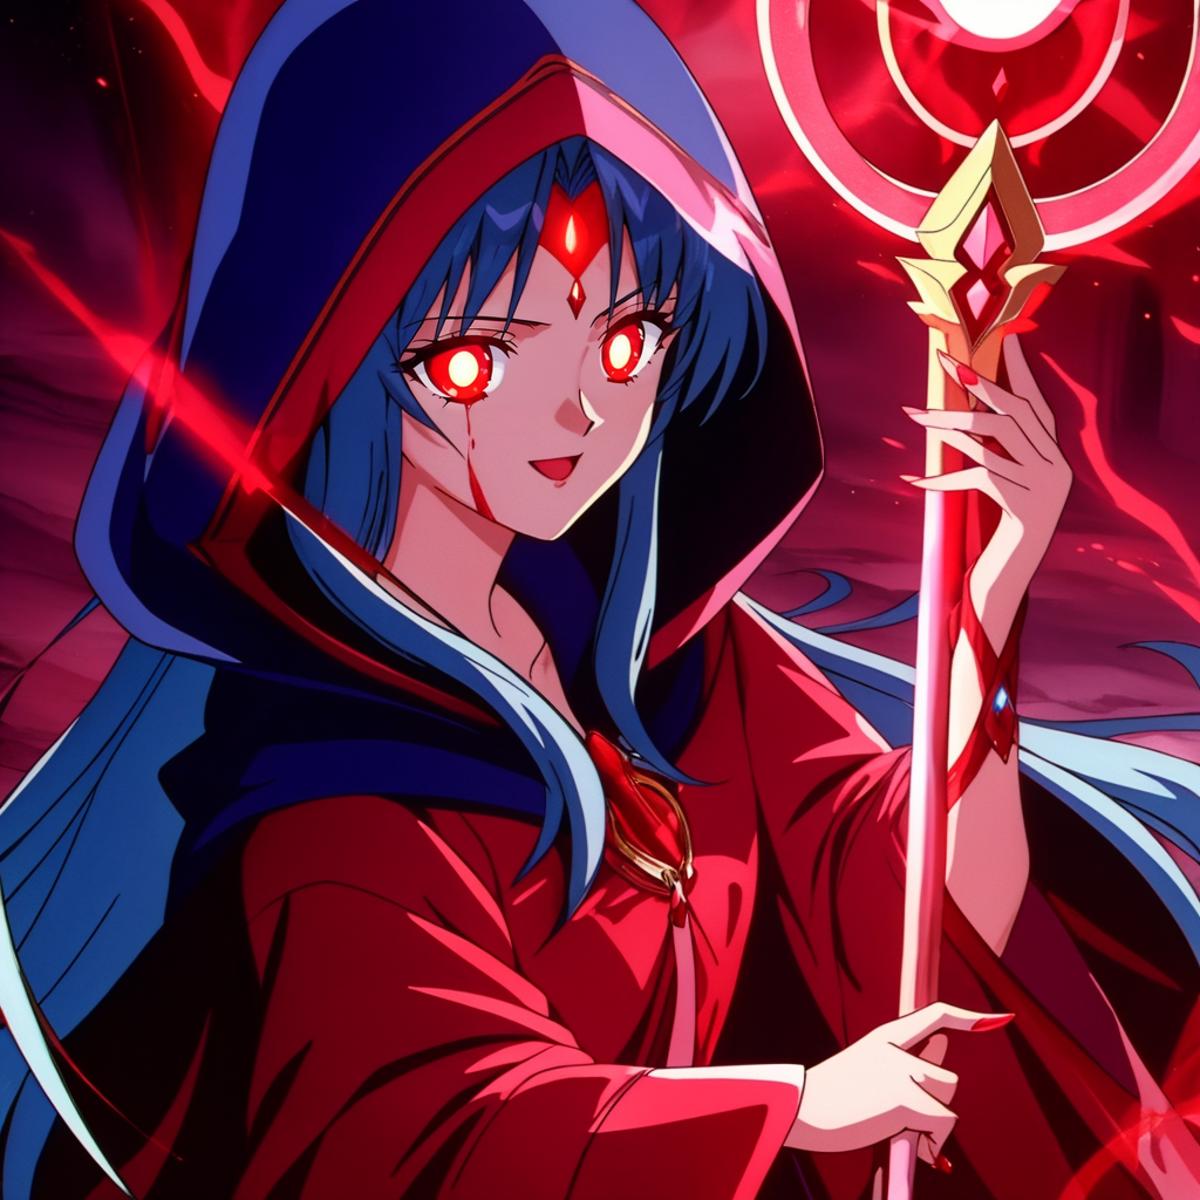 Sailor Moon Anime Style - Lora image by navimixu